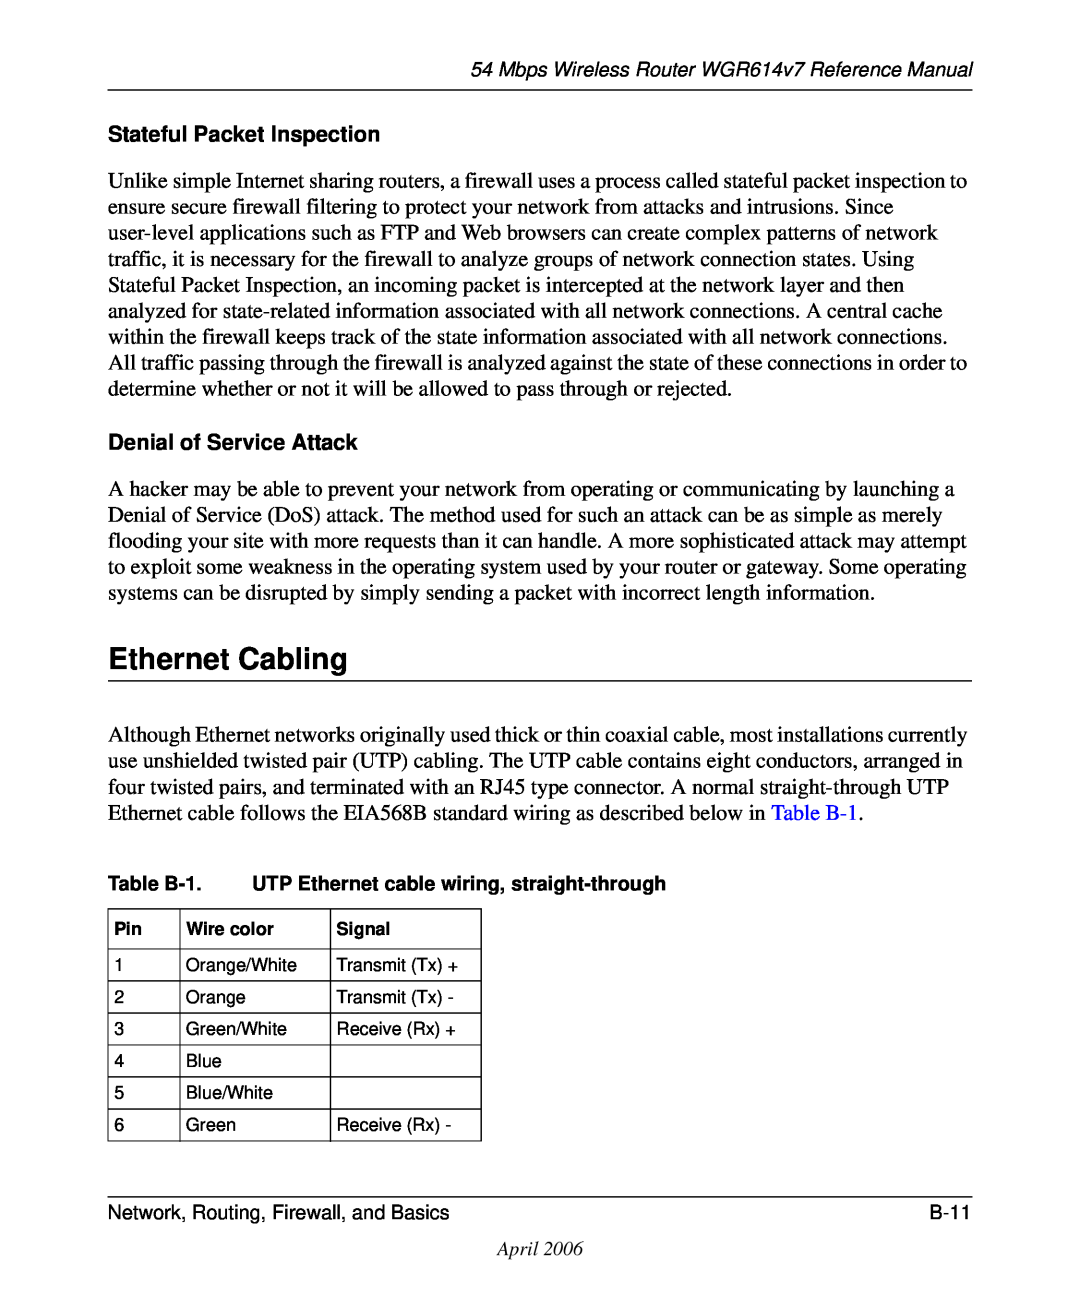 NETGEAR WGR614v7 manual Ethernet Cabling, Stateful Packet Inspection, Denial of Service Attack 